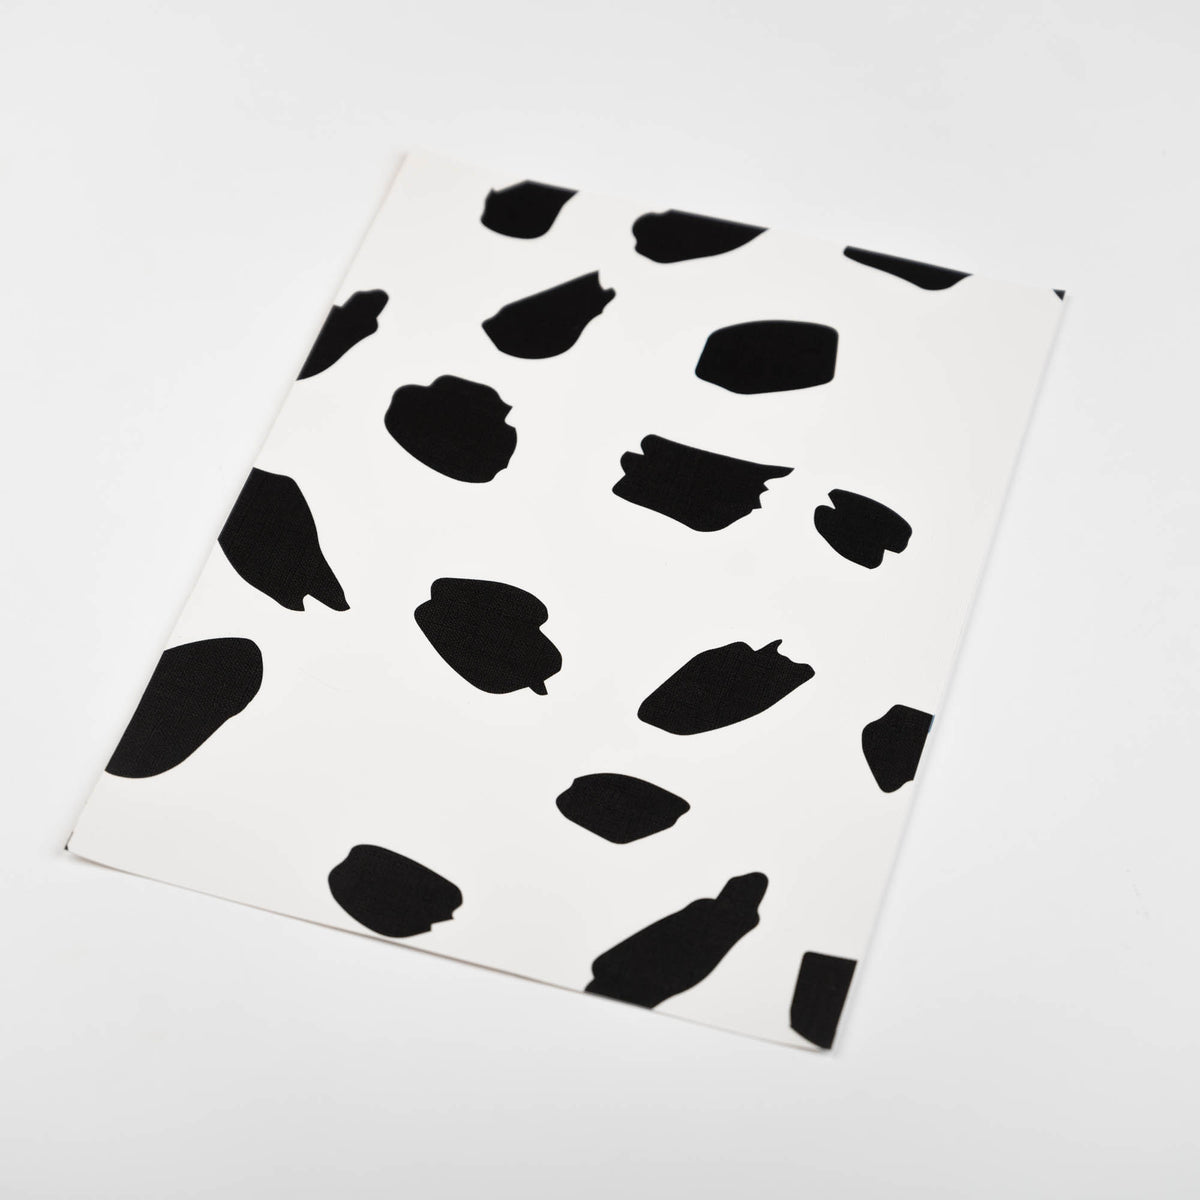 Peel & Stick Wallpaper Swatch - Cow Print Animal Black White